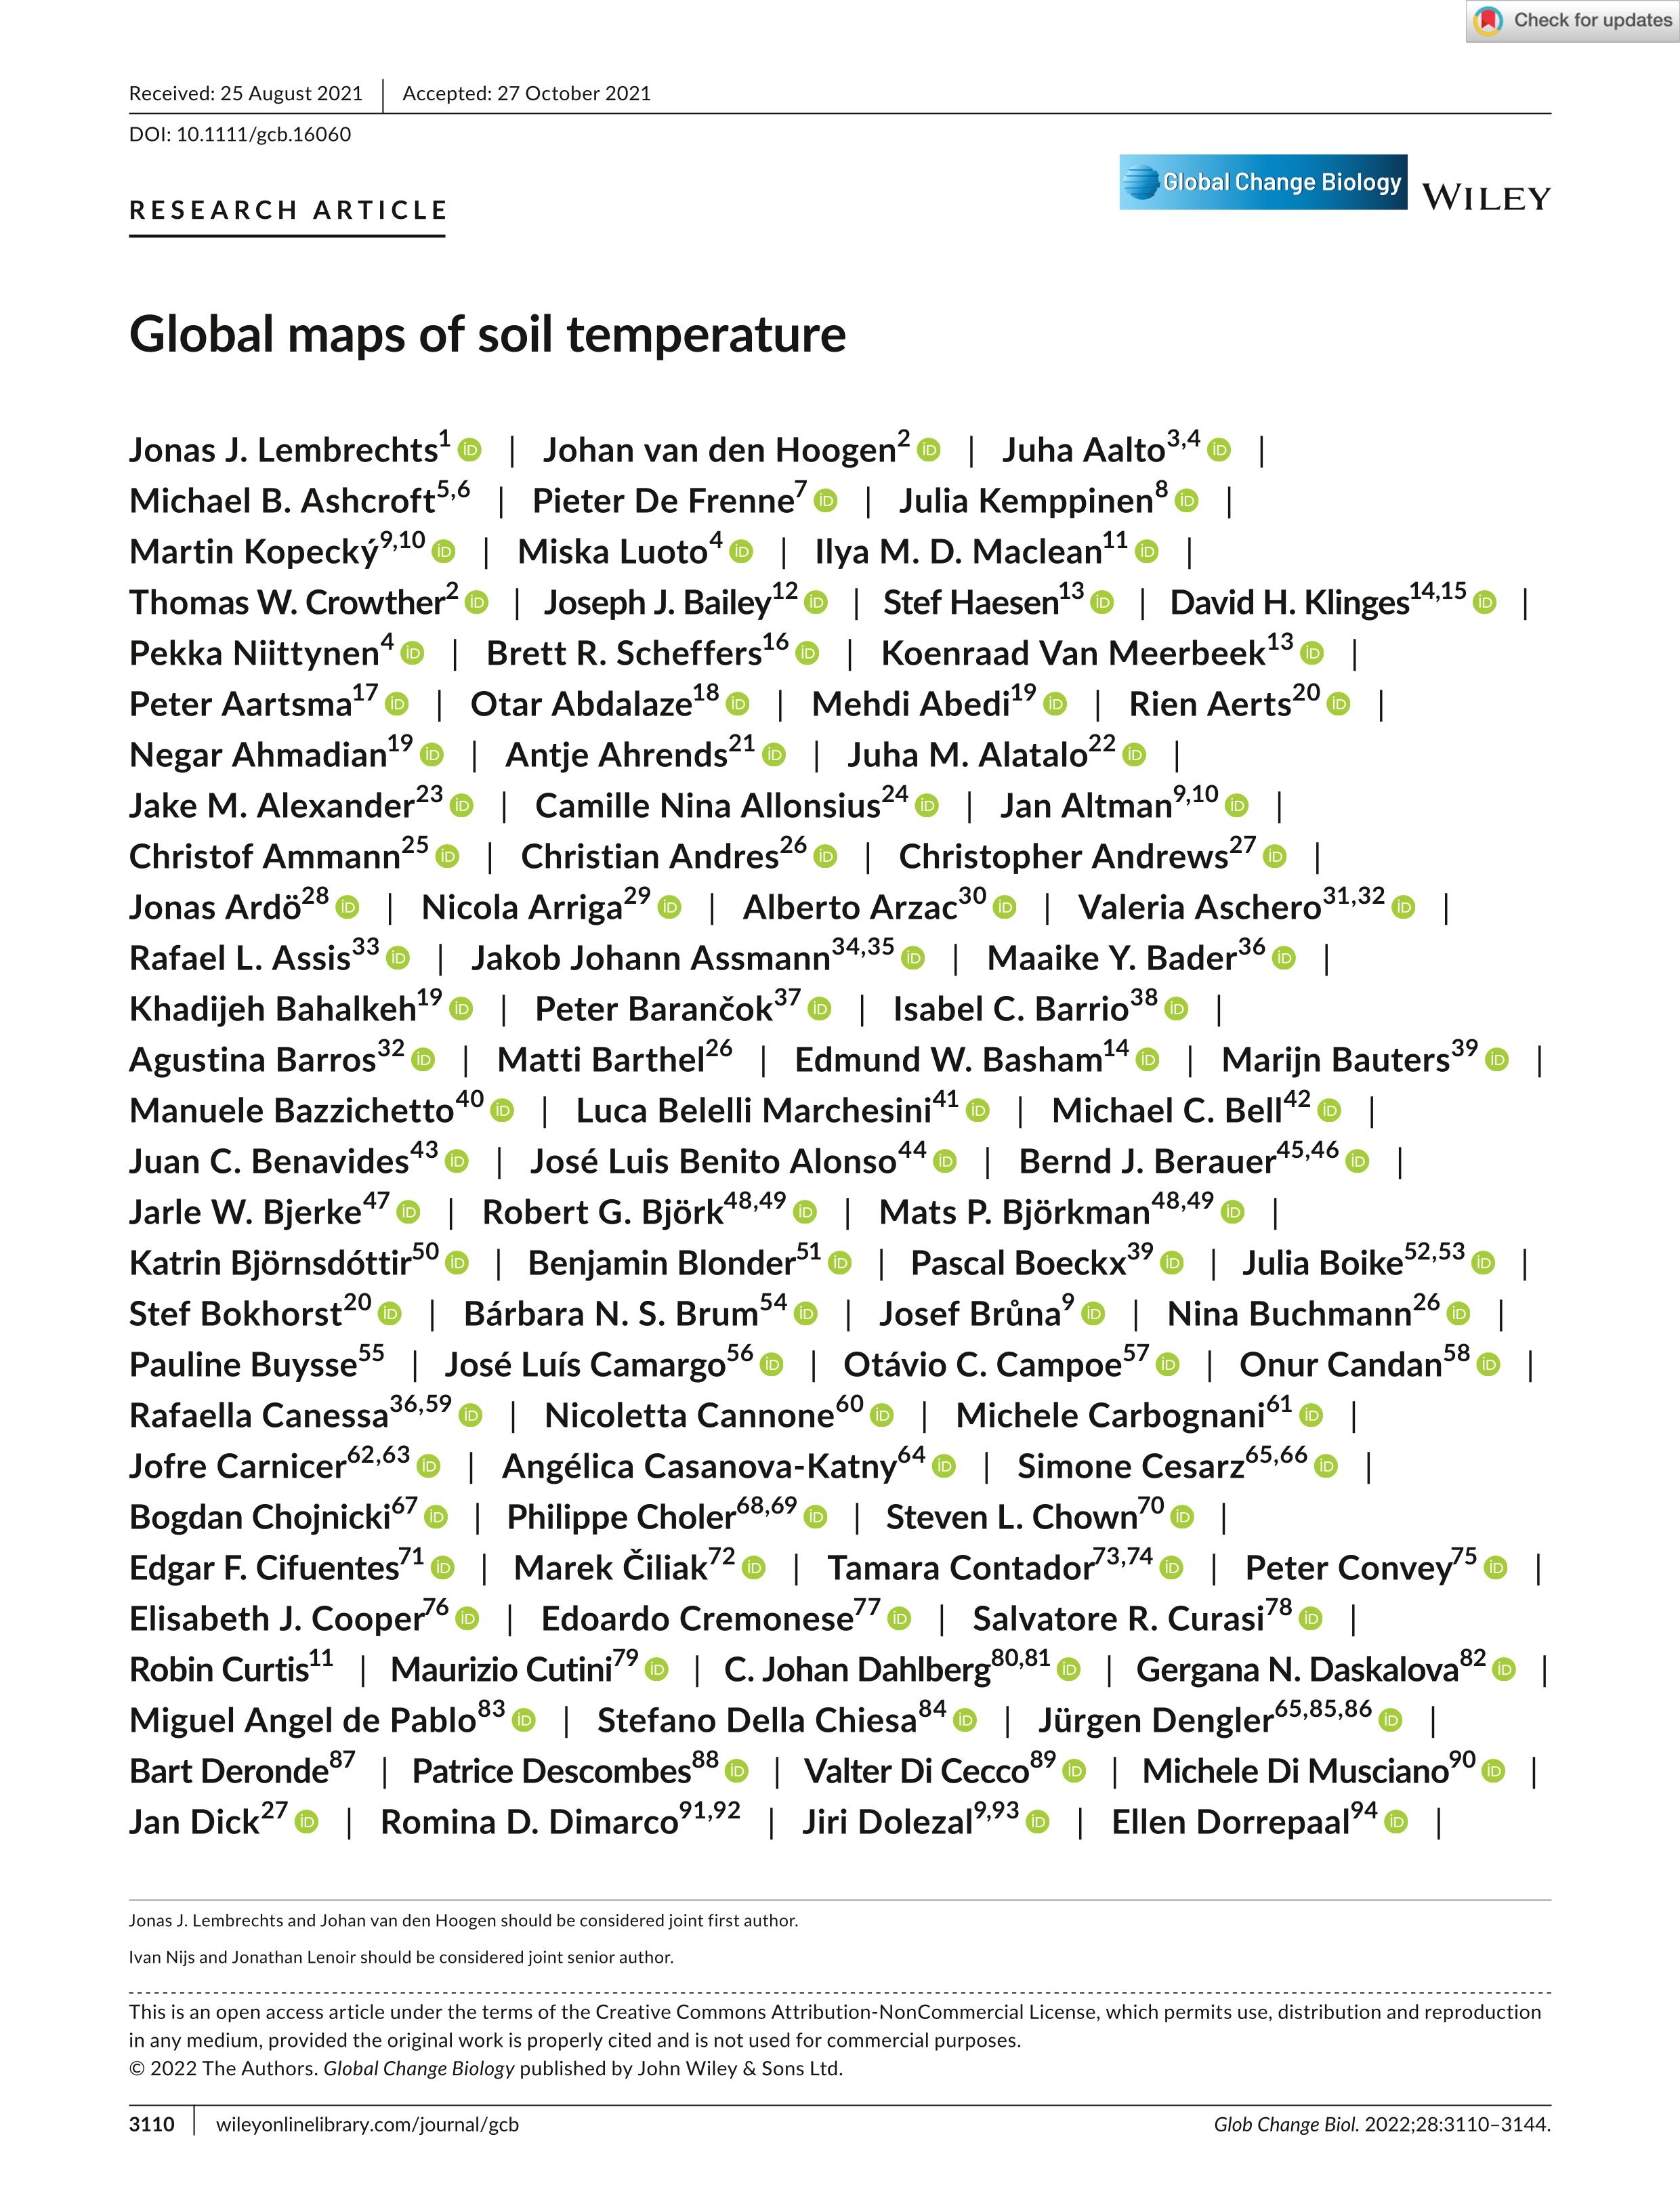 Global maps of soil temperature